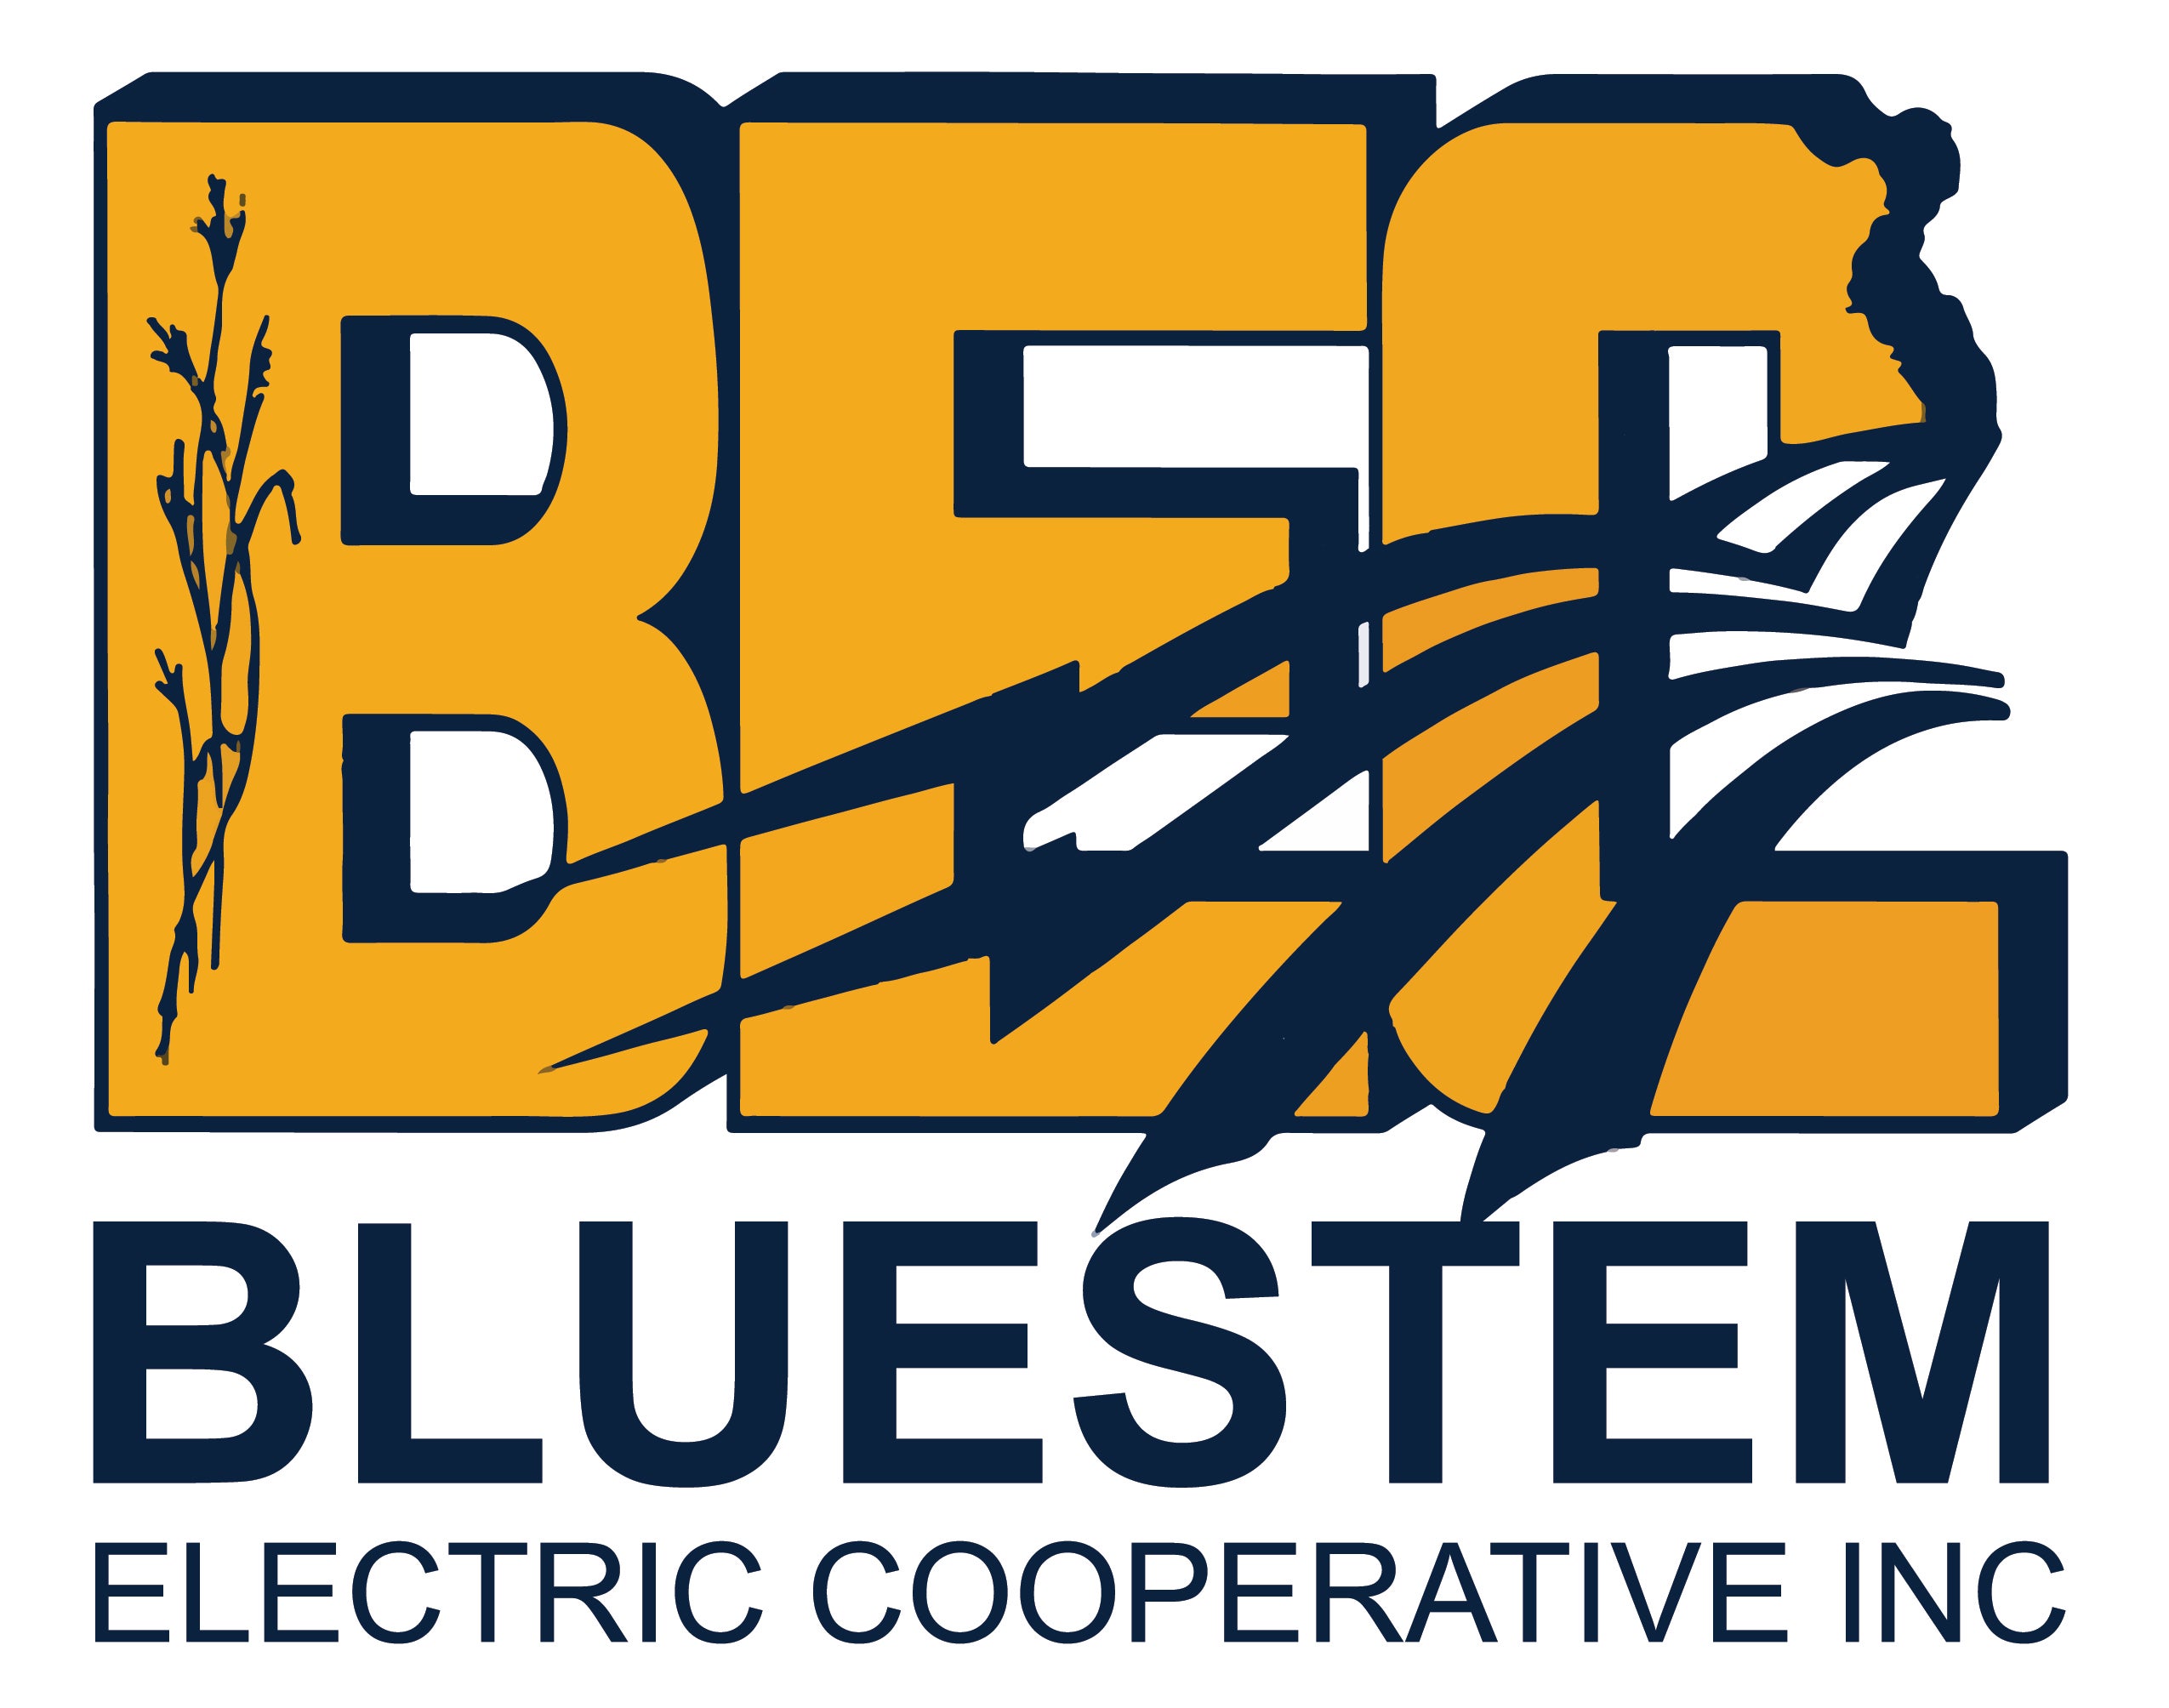 Bluestem Electric Cooperative